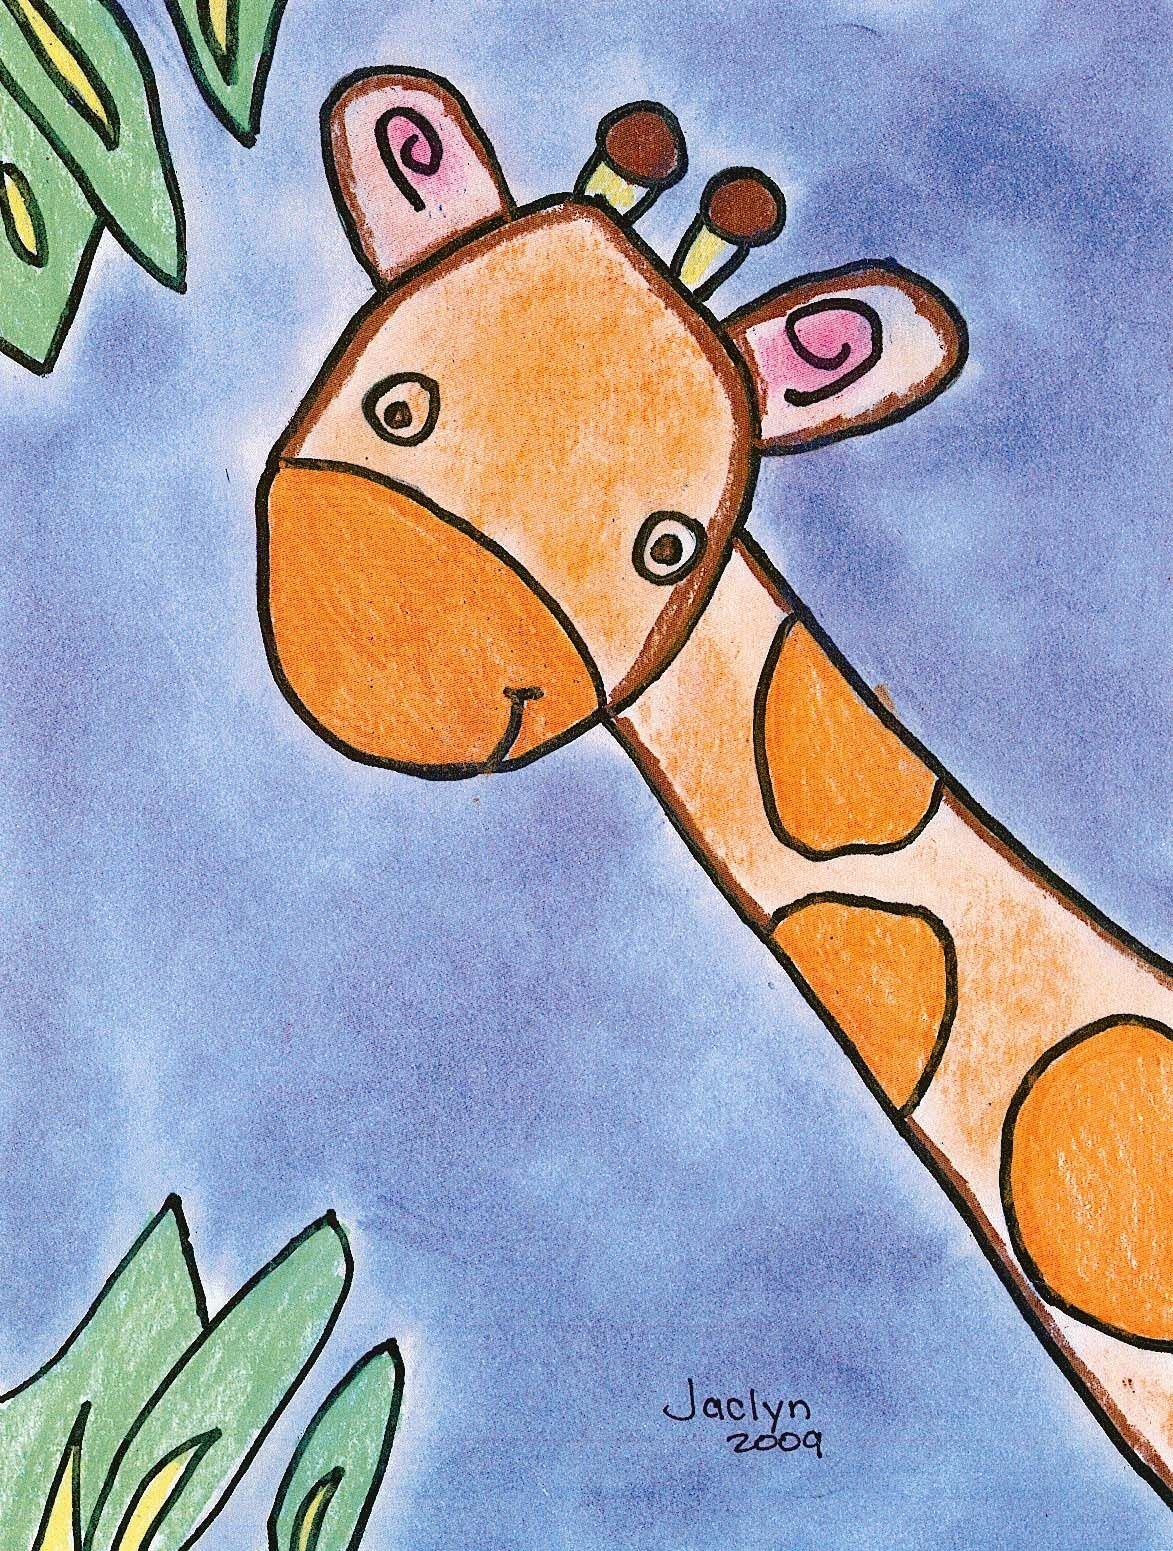 Жираф раскраска